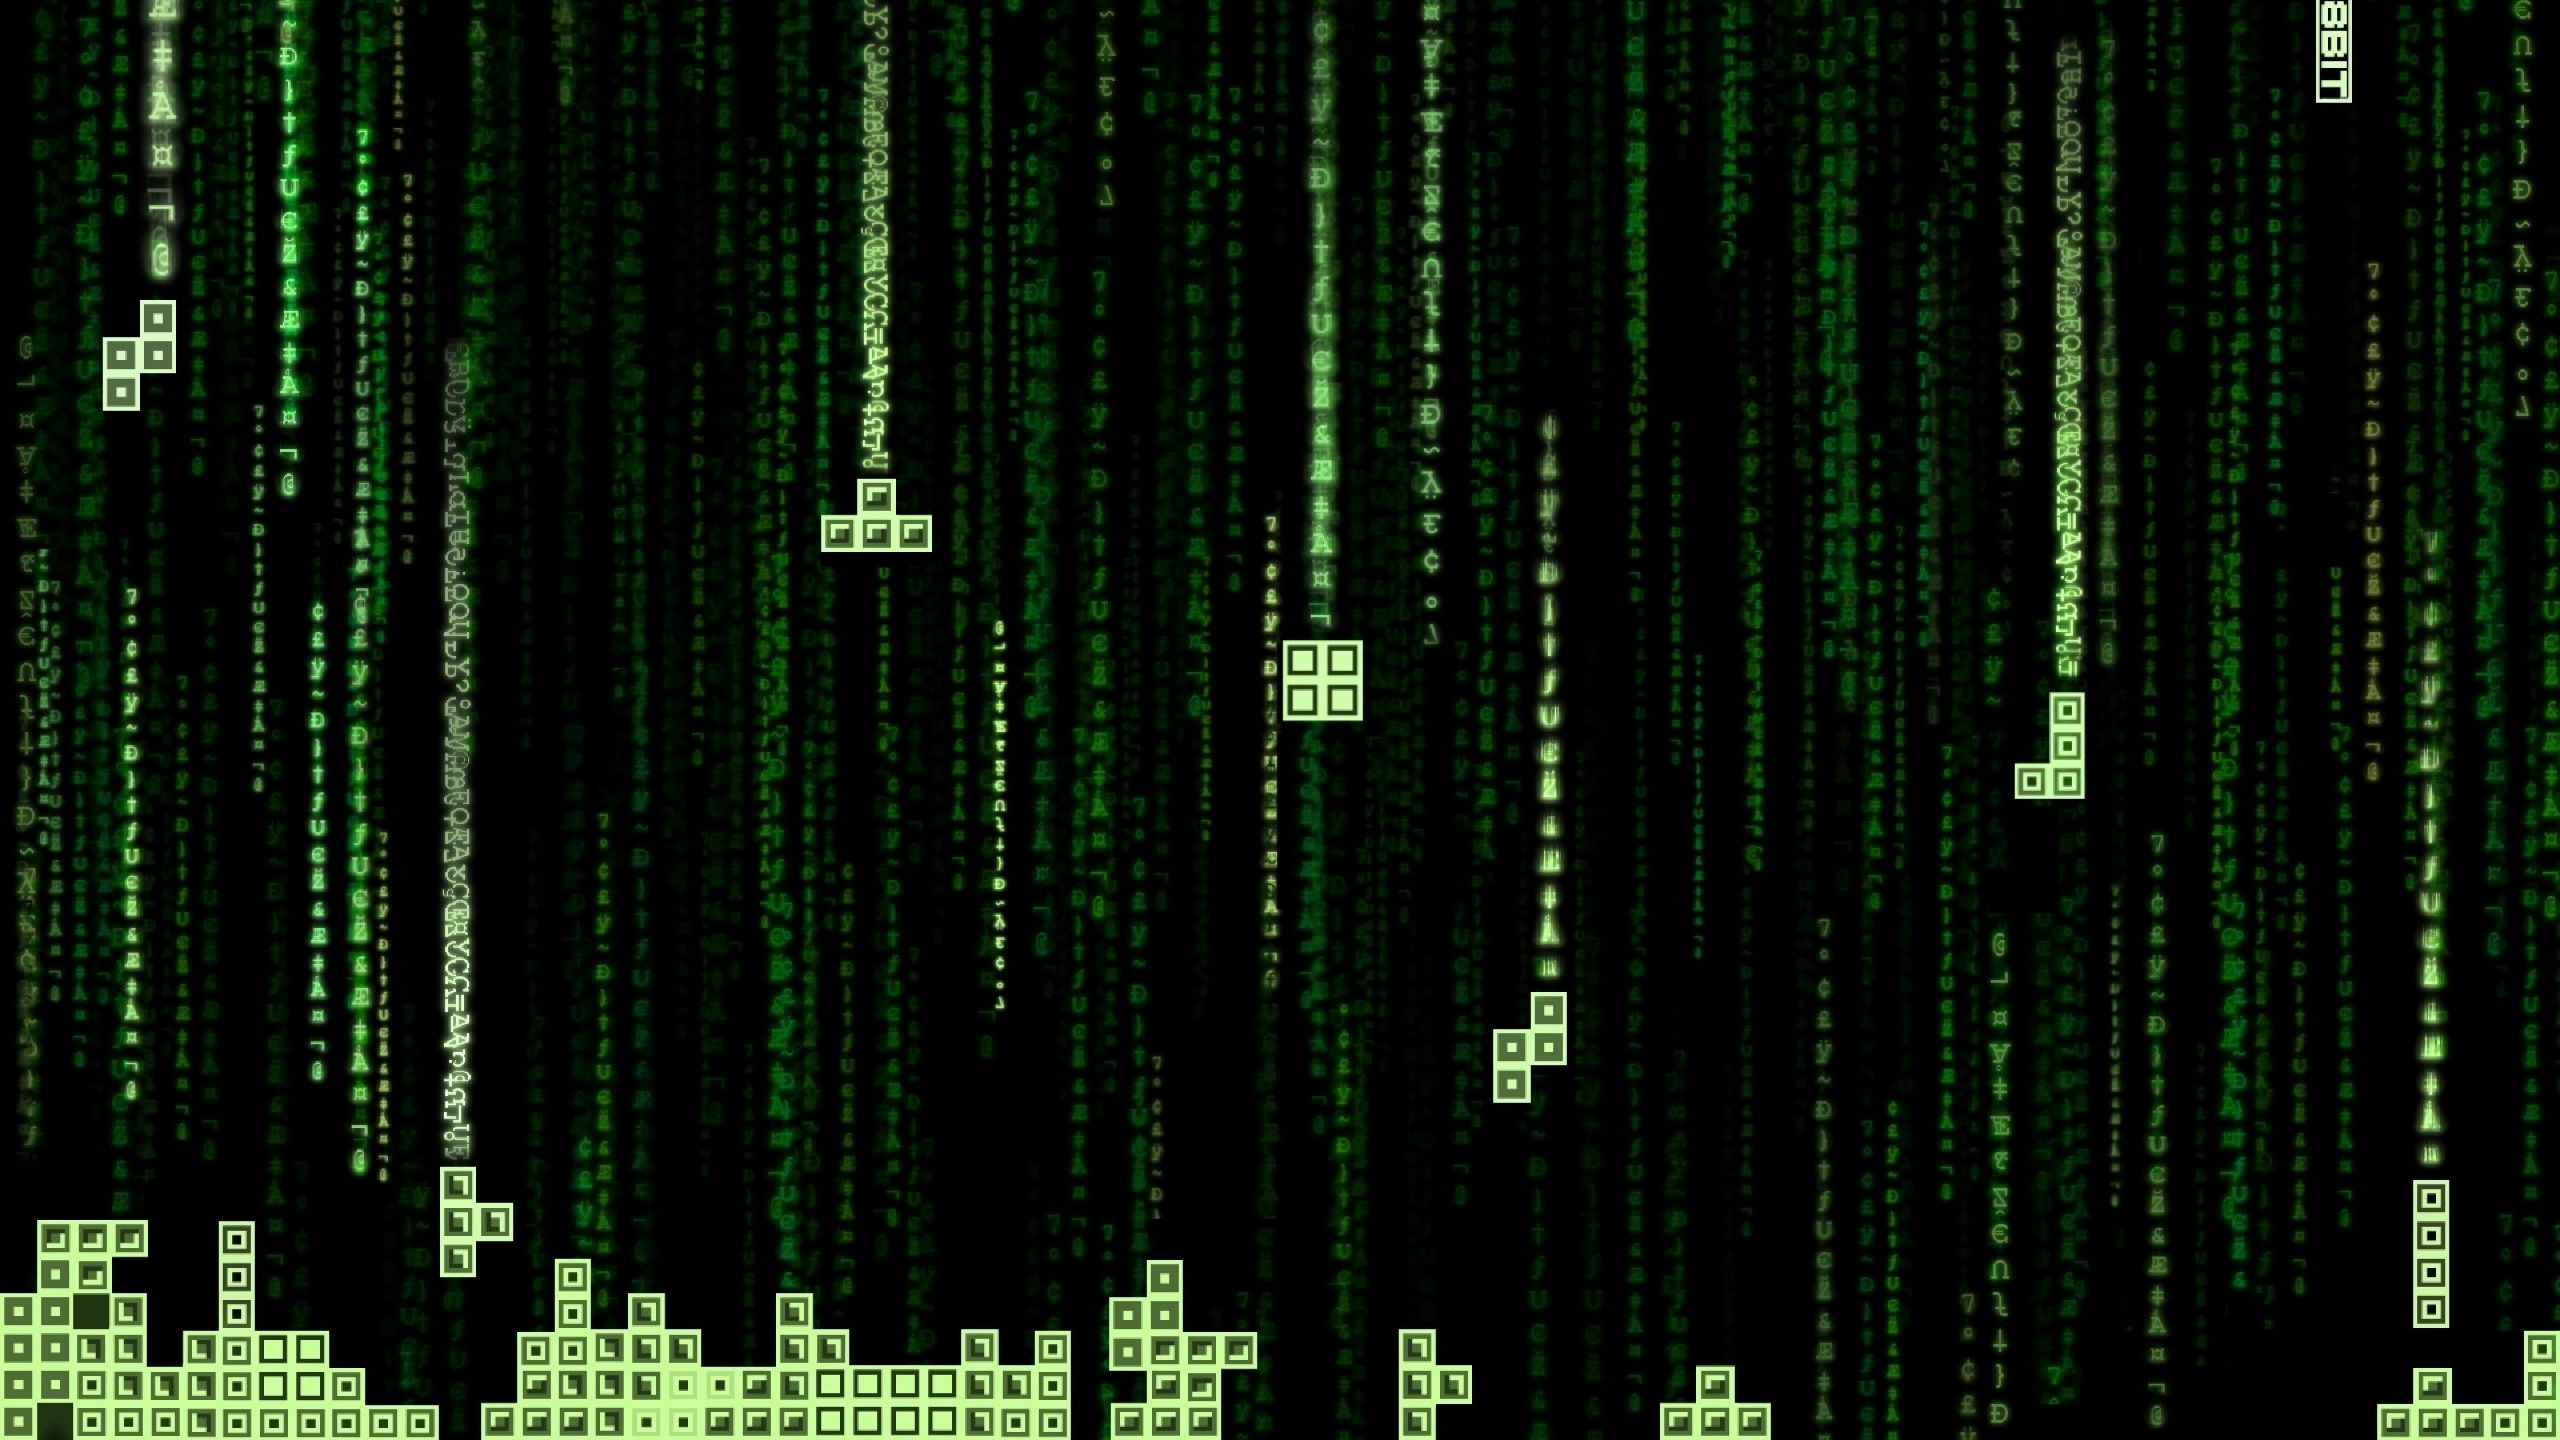 The Matrix Tetris Code 1440P Resolution Wallpaper, HD Games 4K Wallpaper, Image, Photo and Background